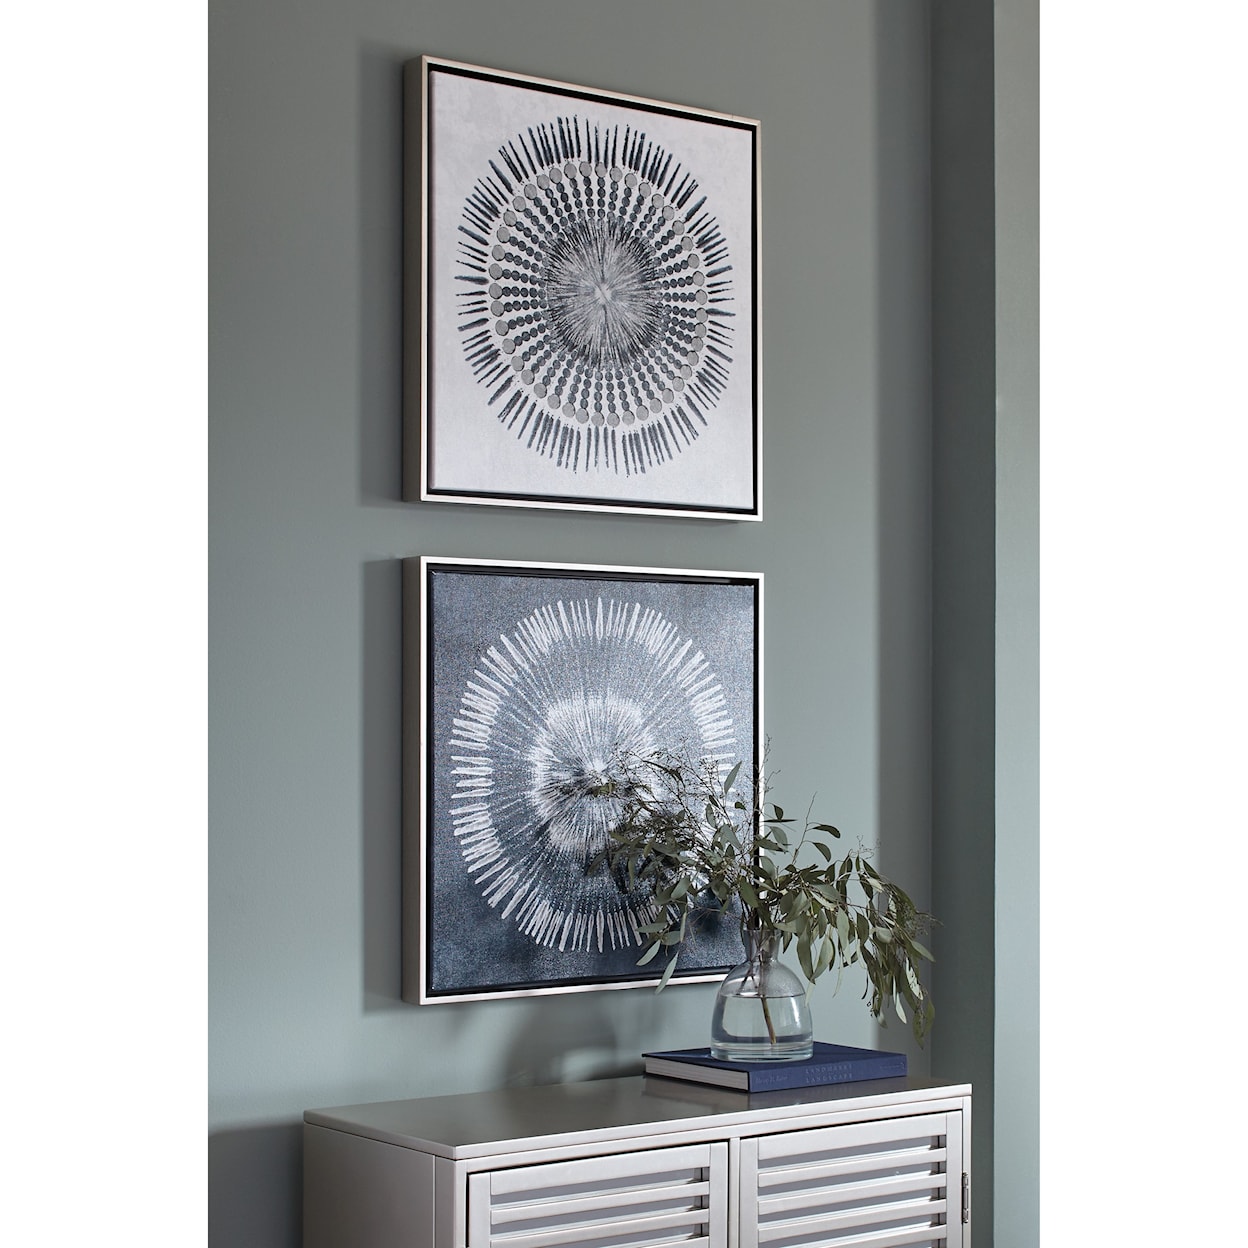 Ashley Furniture Signature Design Wall Art Monterey Blue/White Wall Art Set